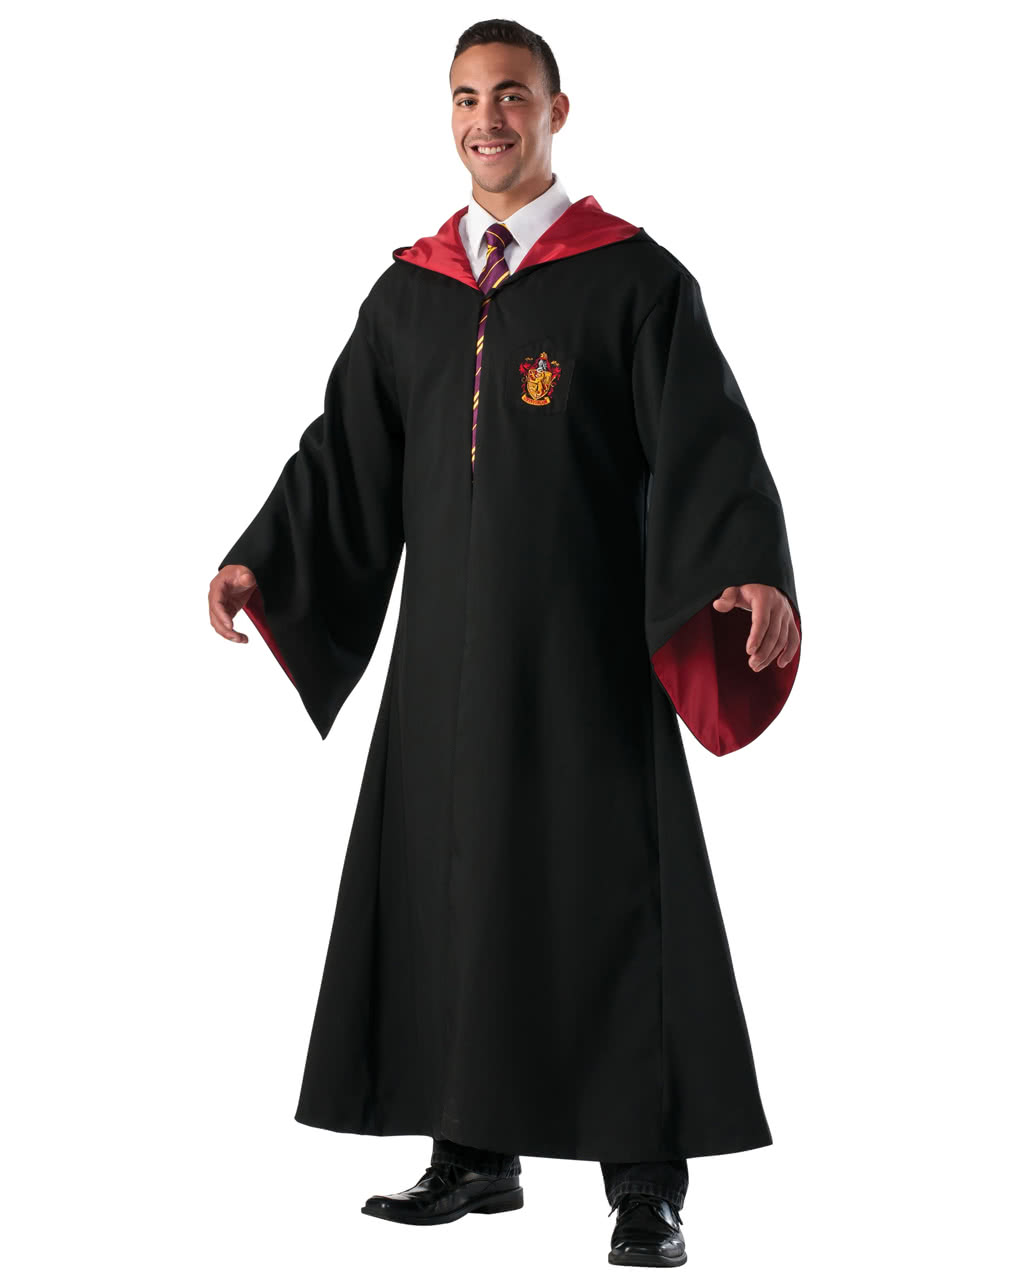 Gryffindor Robe Replika DLX  Harry Potter Umhang Standard von Horror-Shop.com